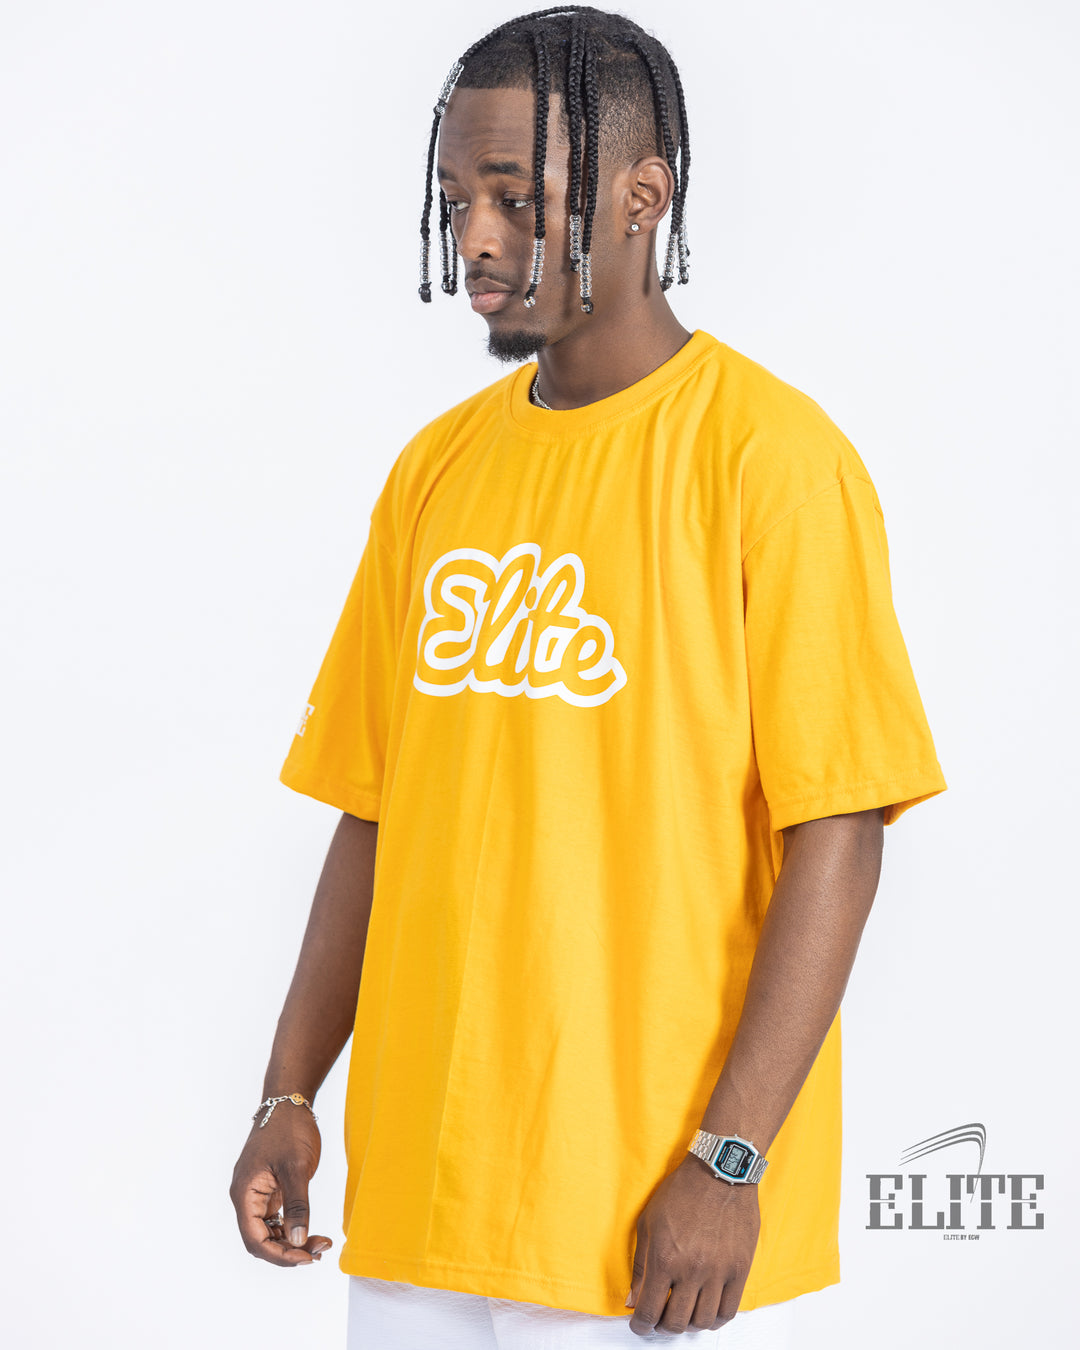 Elite - Shirt - Yellow